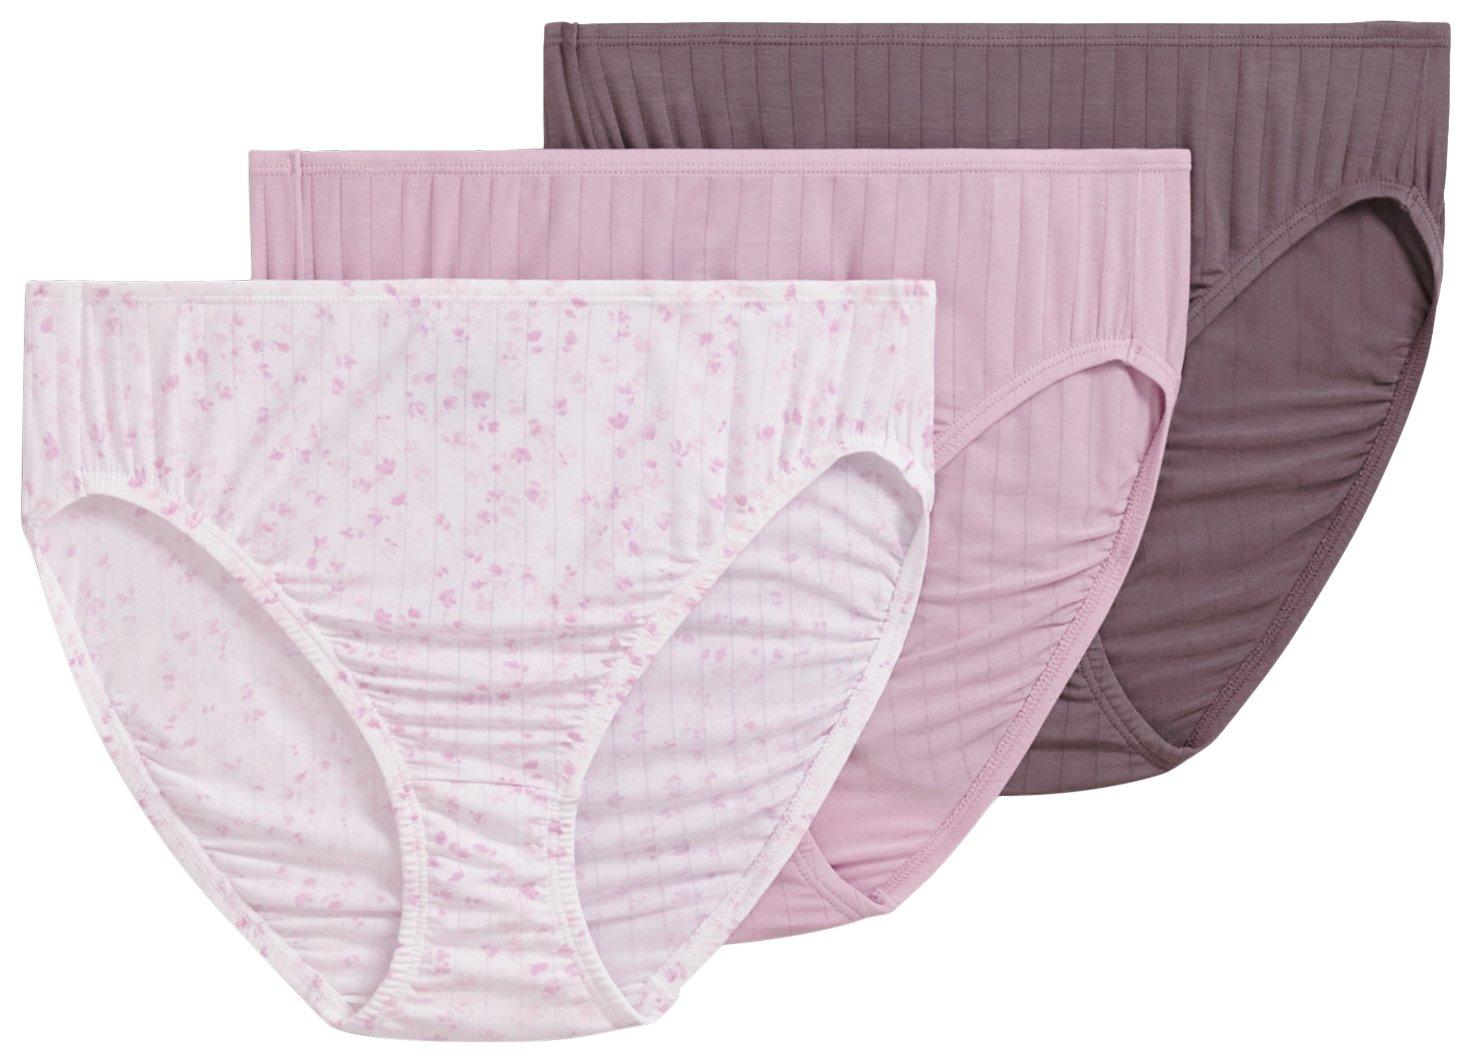 Buy Jockey Assorted Cotton Printed Bikini Panties Pack Of 4 on Snapdeal